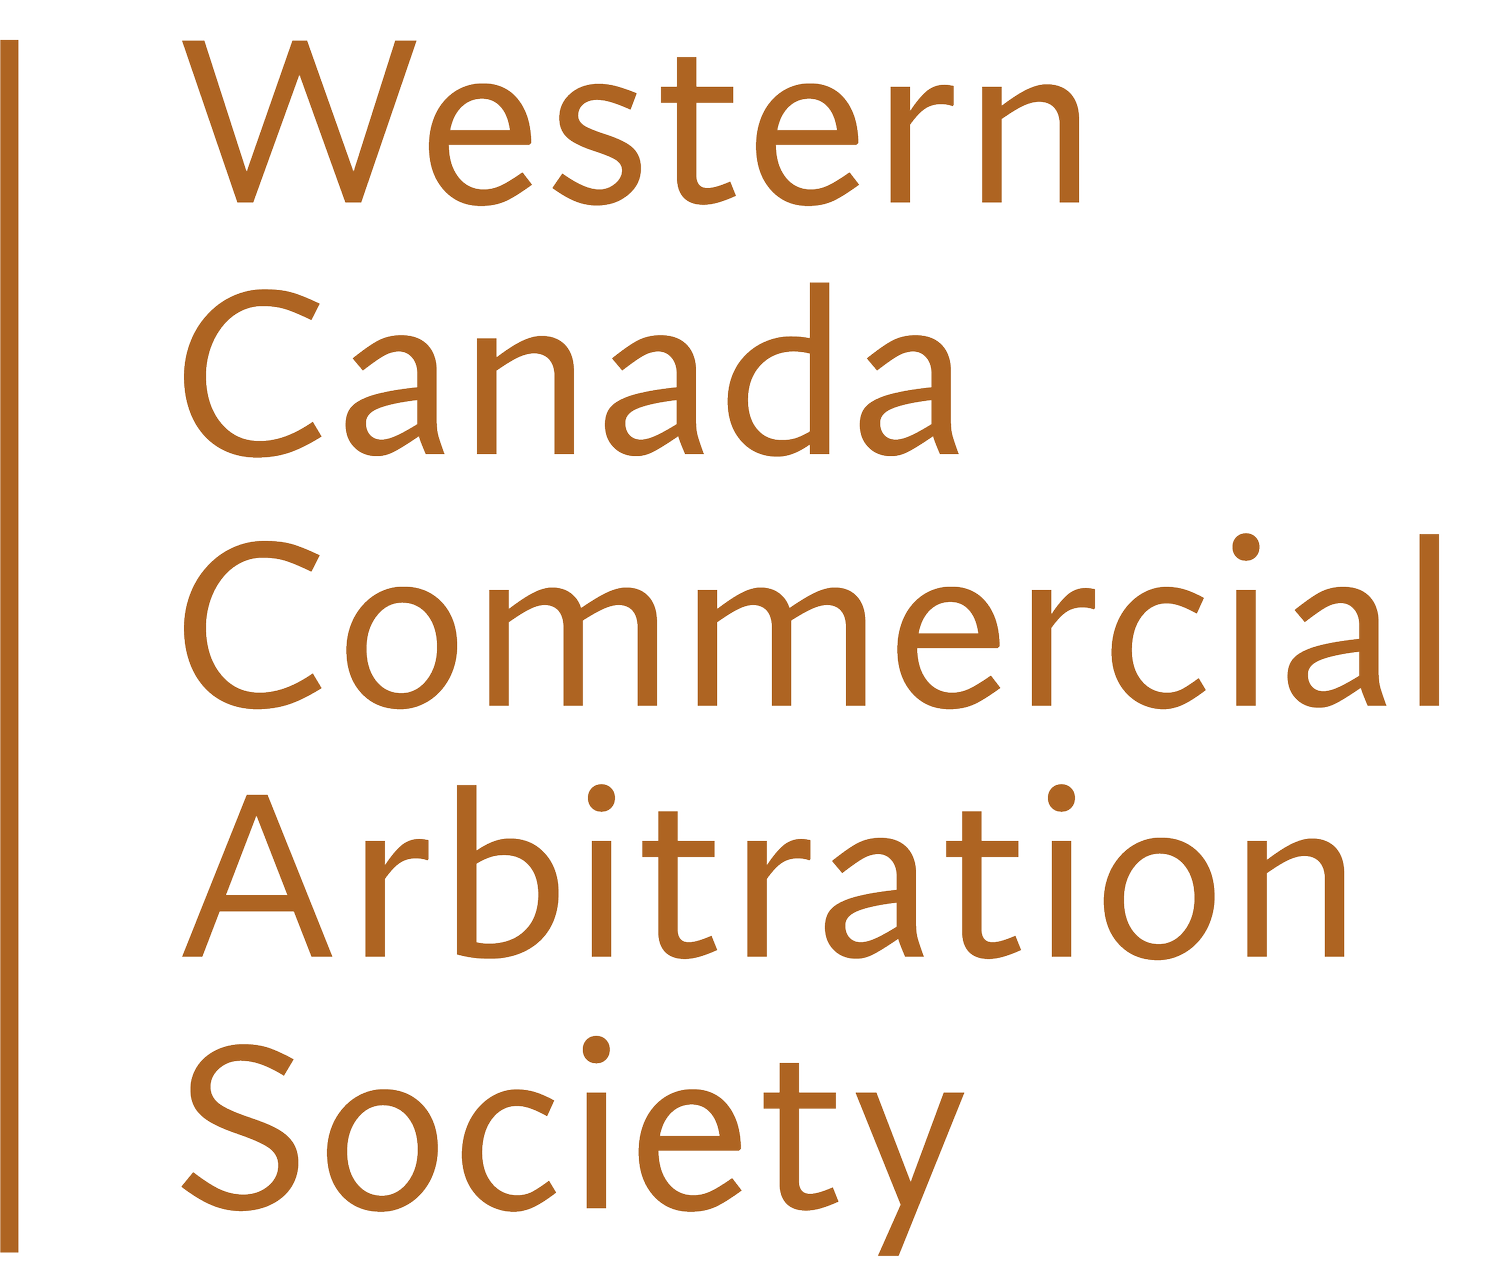 Western Canada Commercial Arbitration Society